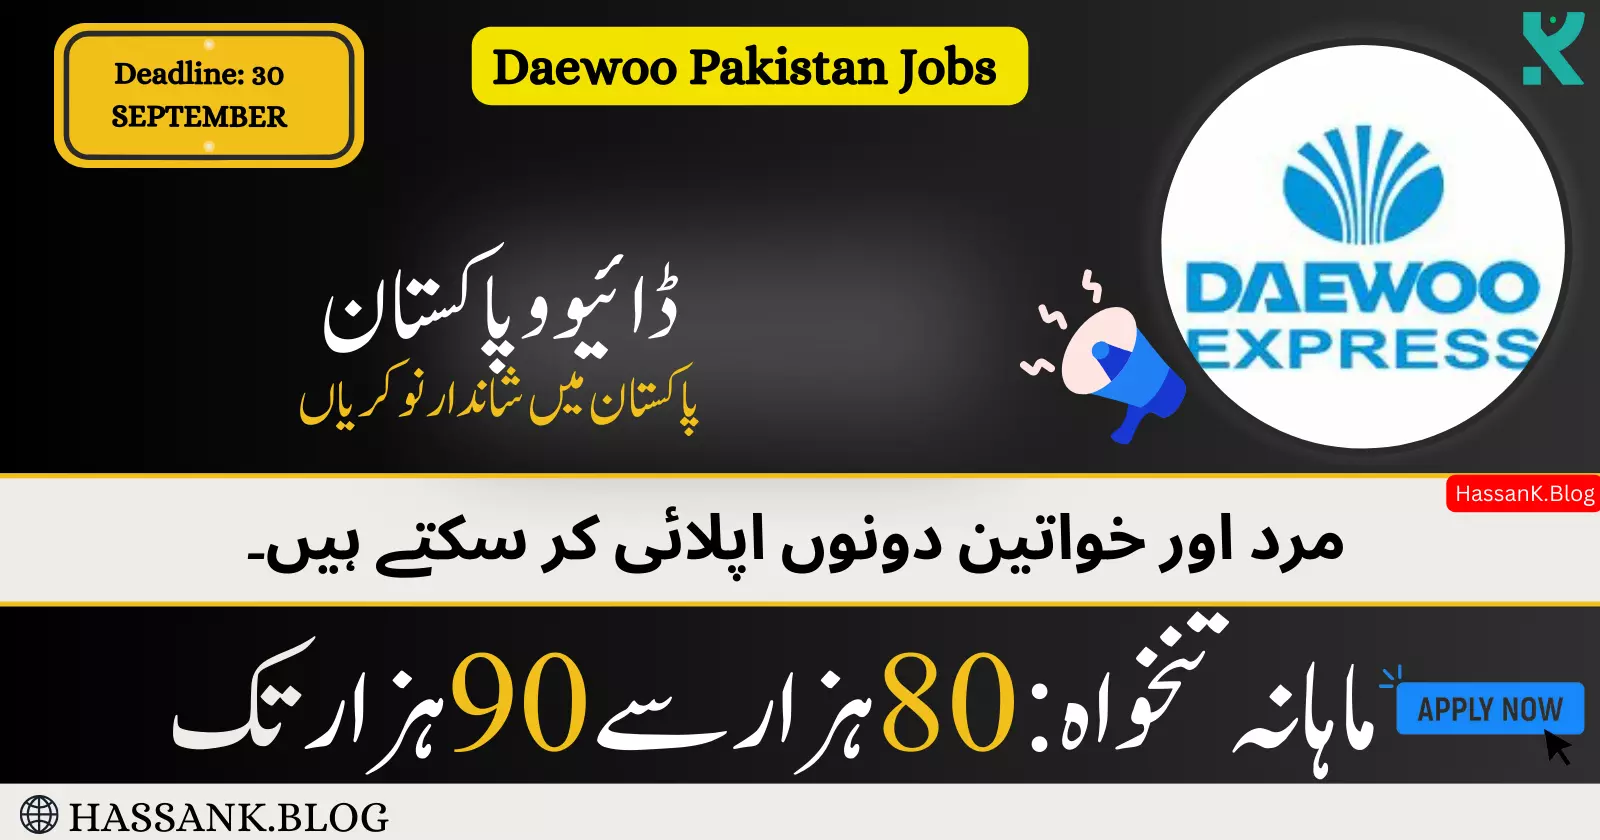 Daewoo Pakistan